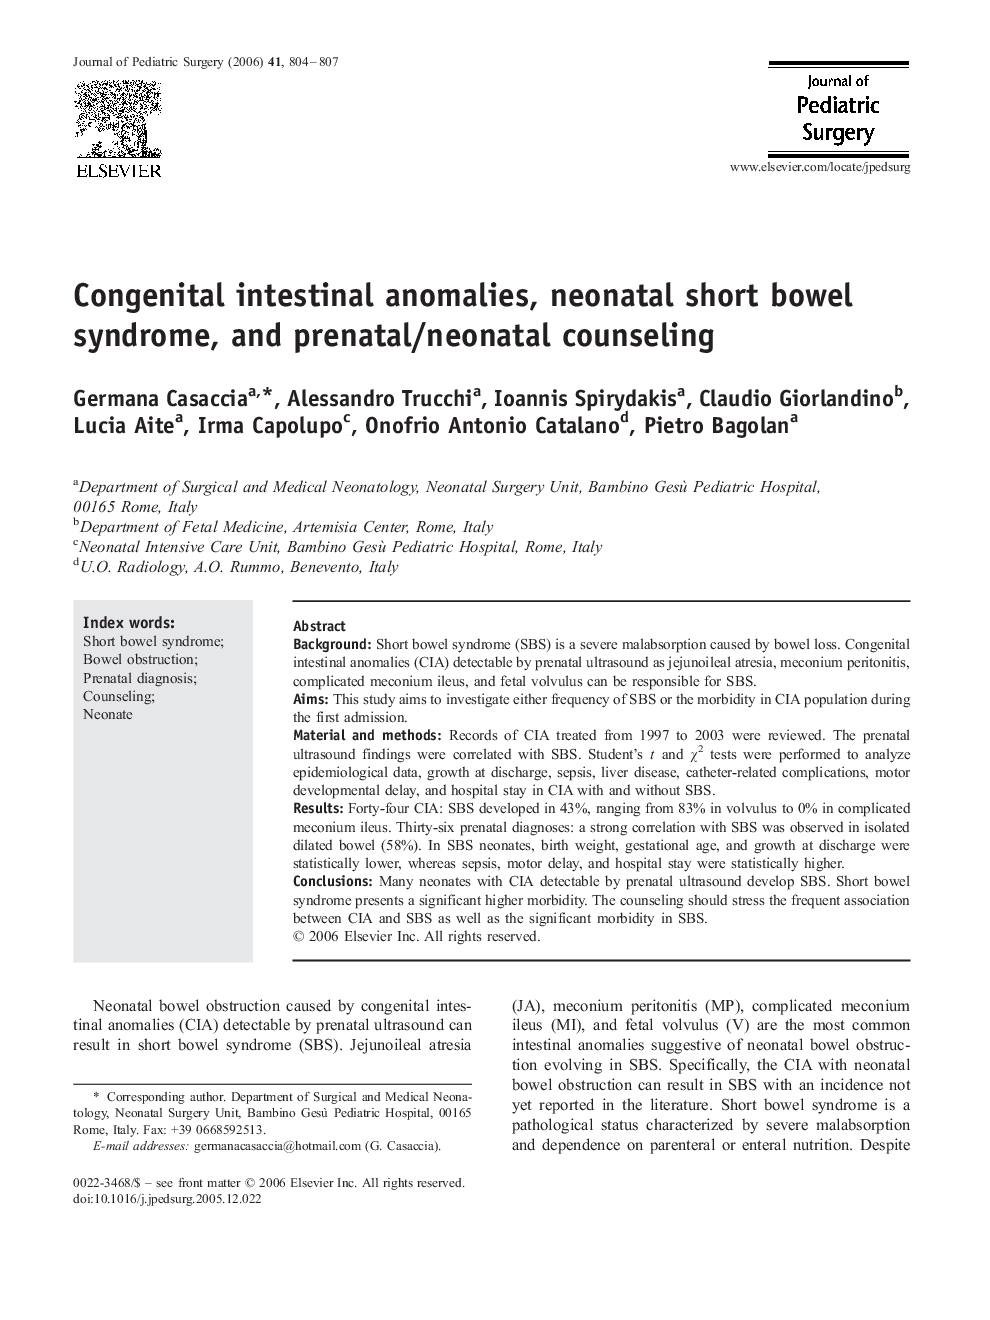 Congenital intestinal anomalies, neonatal short bowel syndrome, and prenatal/neonatal counseling